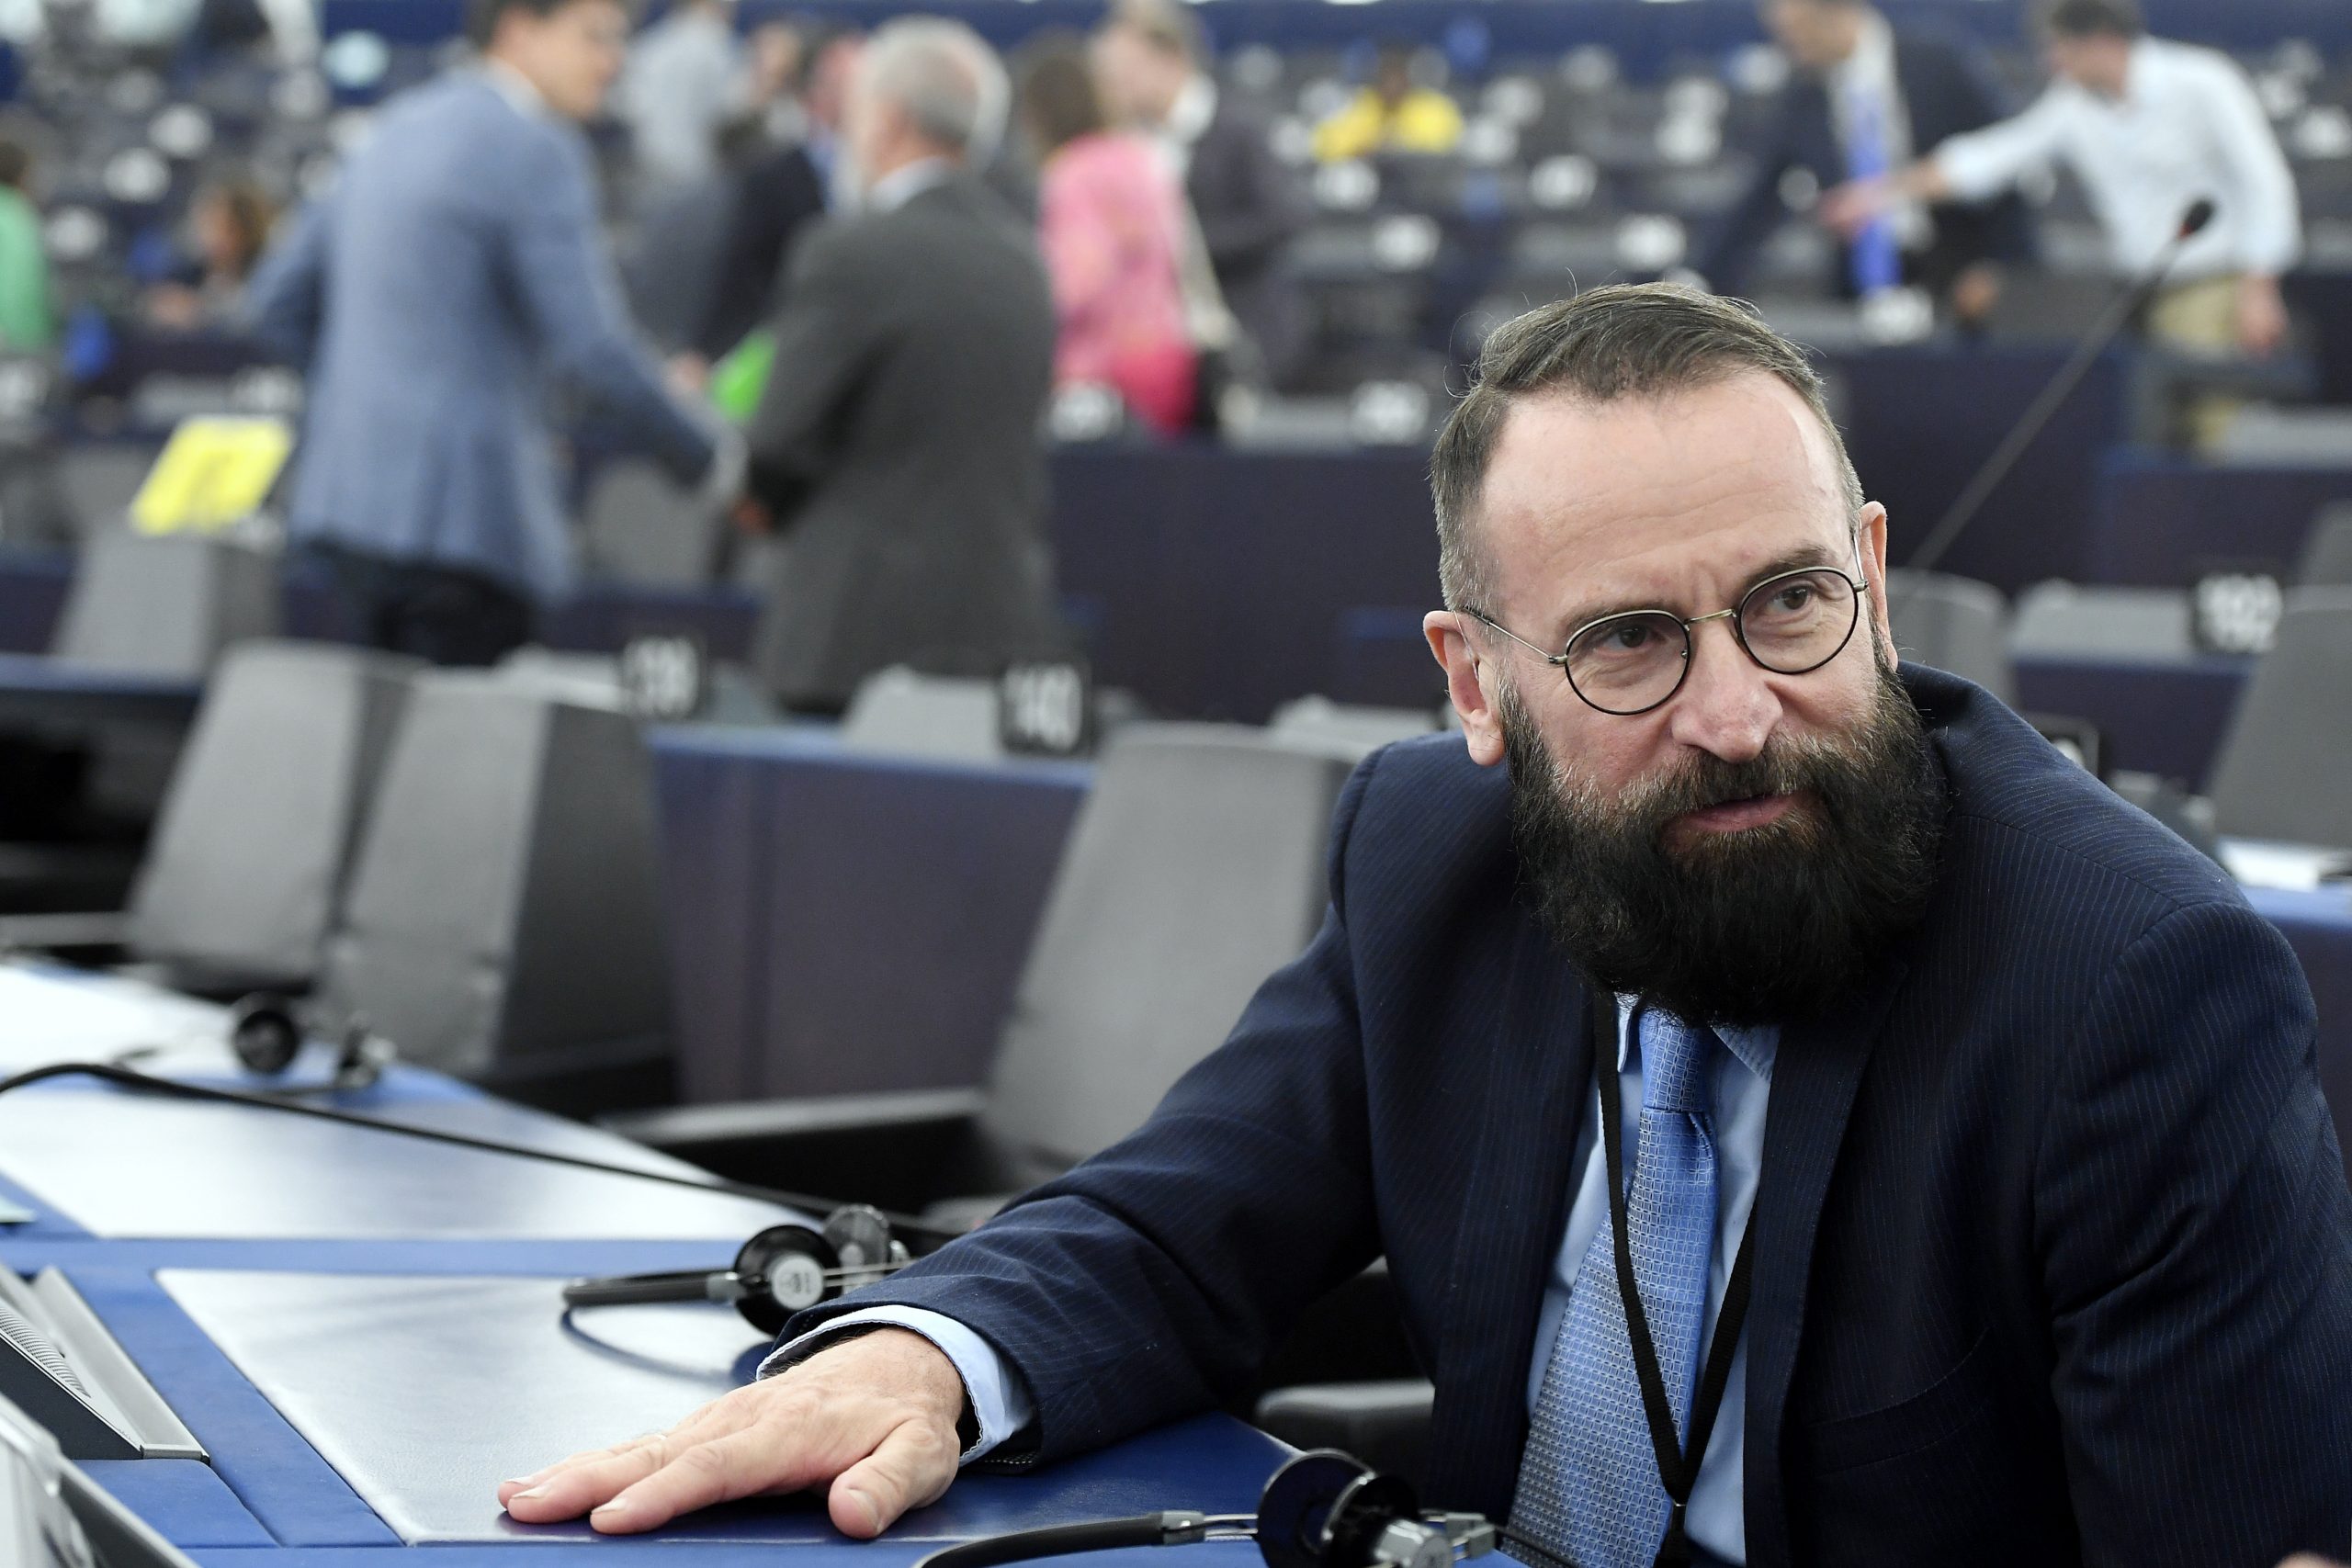 Szájer Scandal: Opposition Criticizes Fidesz for 'Shallow Christian Conservative Values'